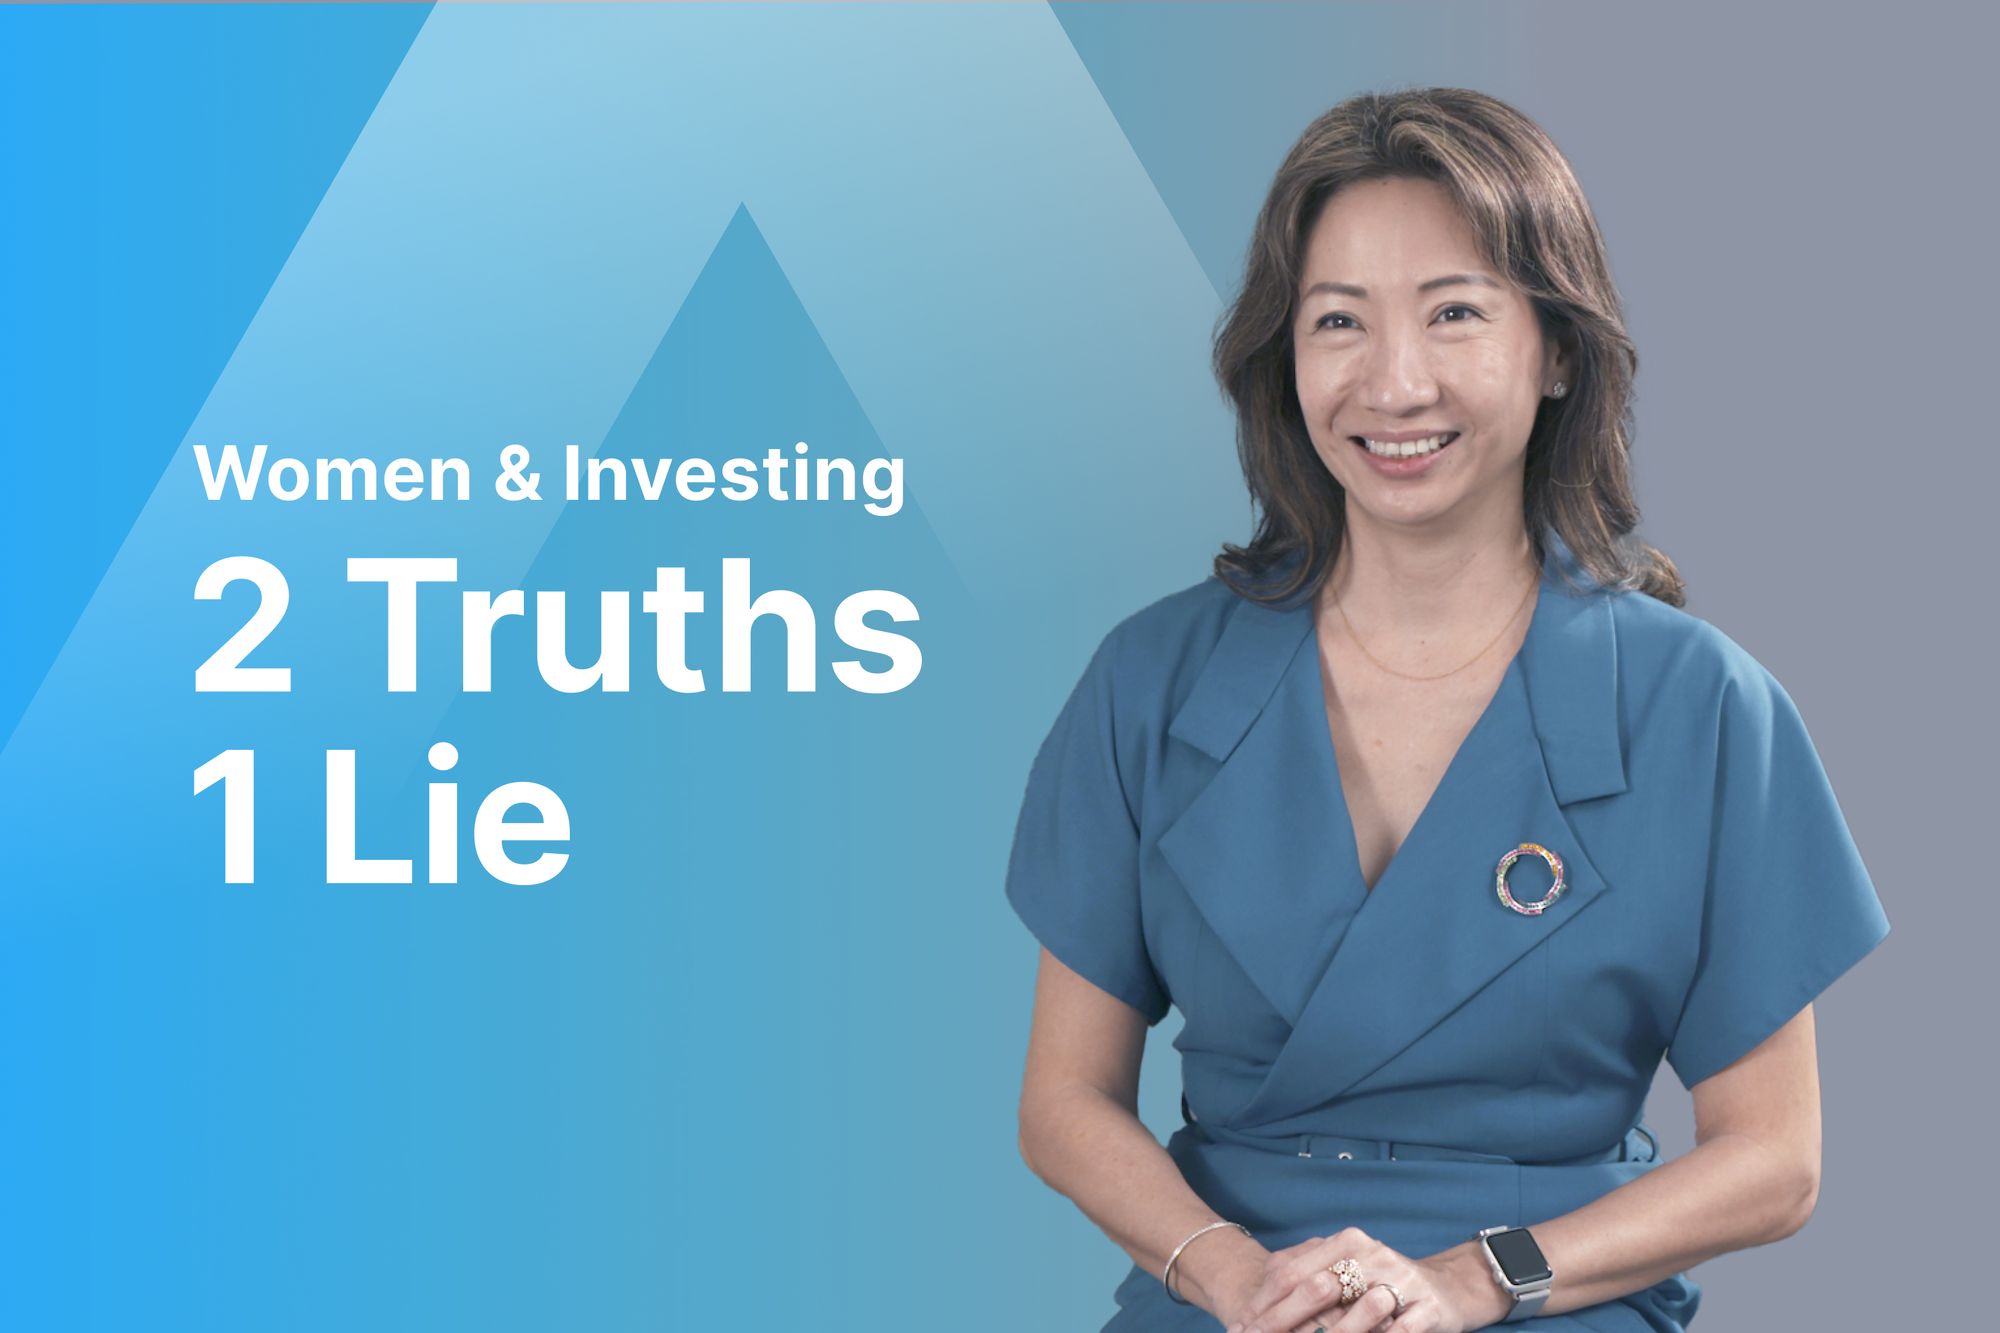 Women & Investing: 2 Truths 1 Lie